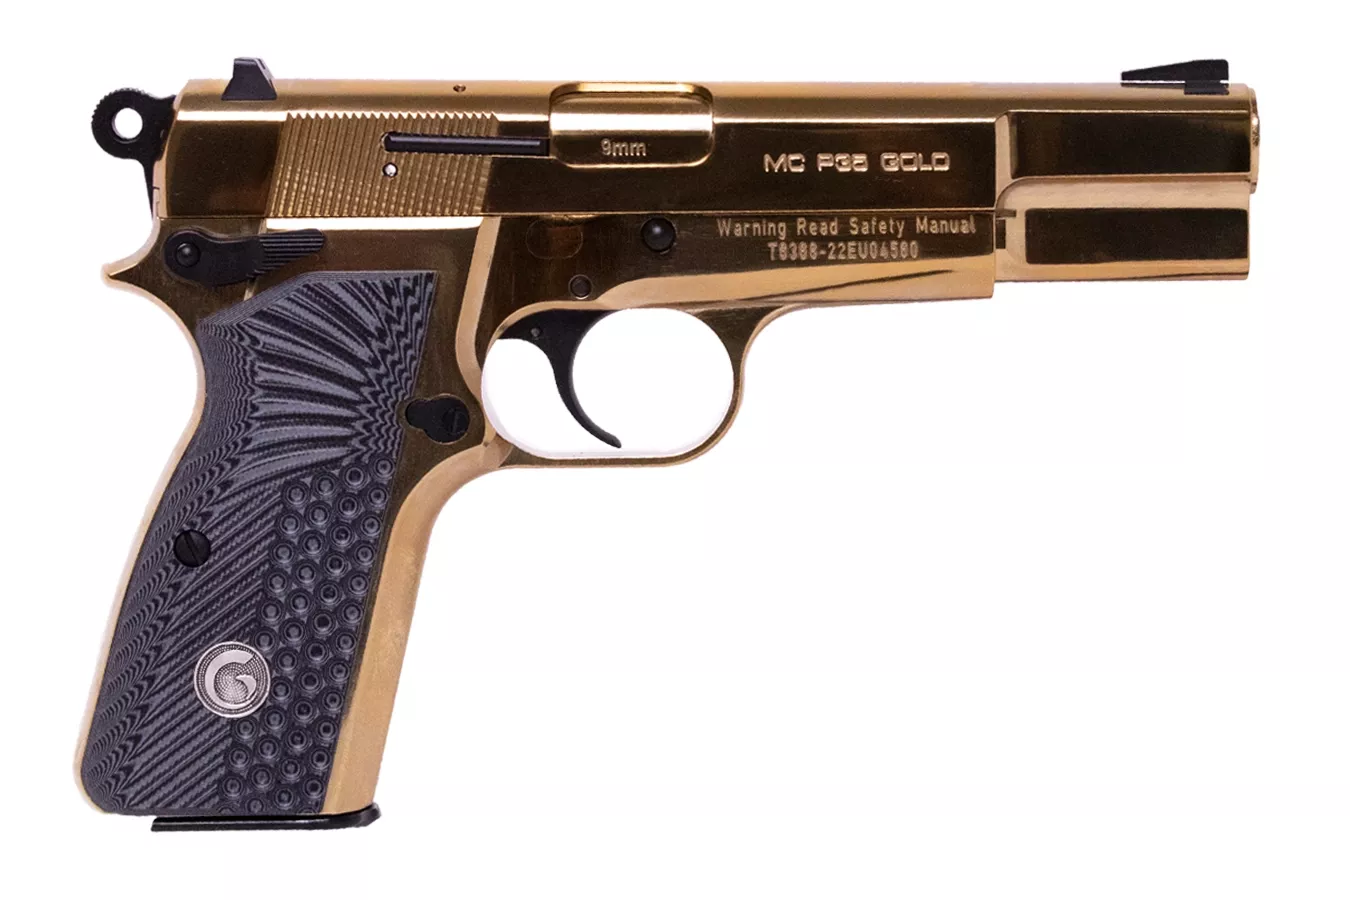 Girsan MCP35 9mm Semi-Auto Pistol in Gold Colored Finish - $664.95